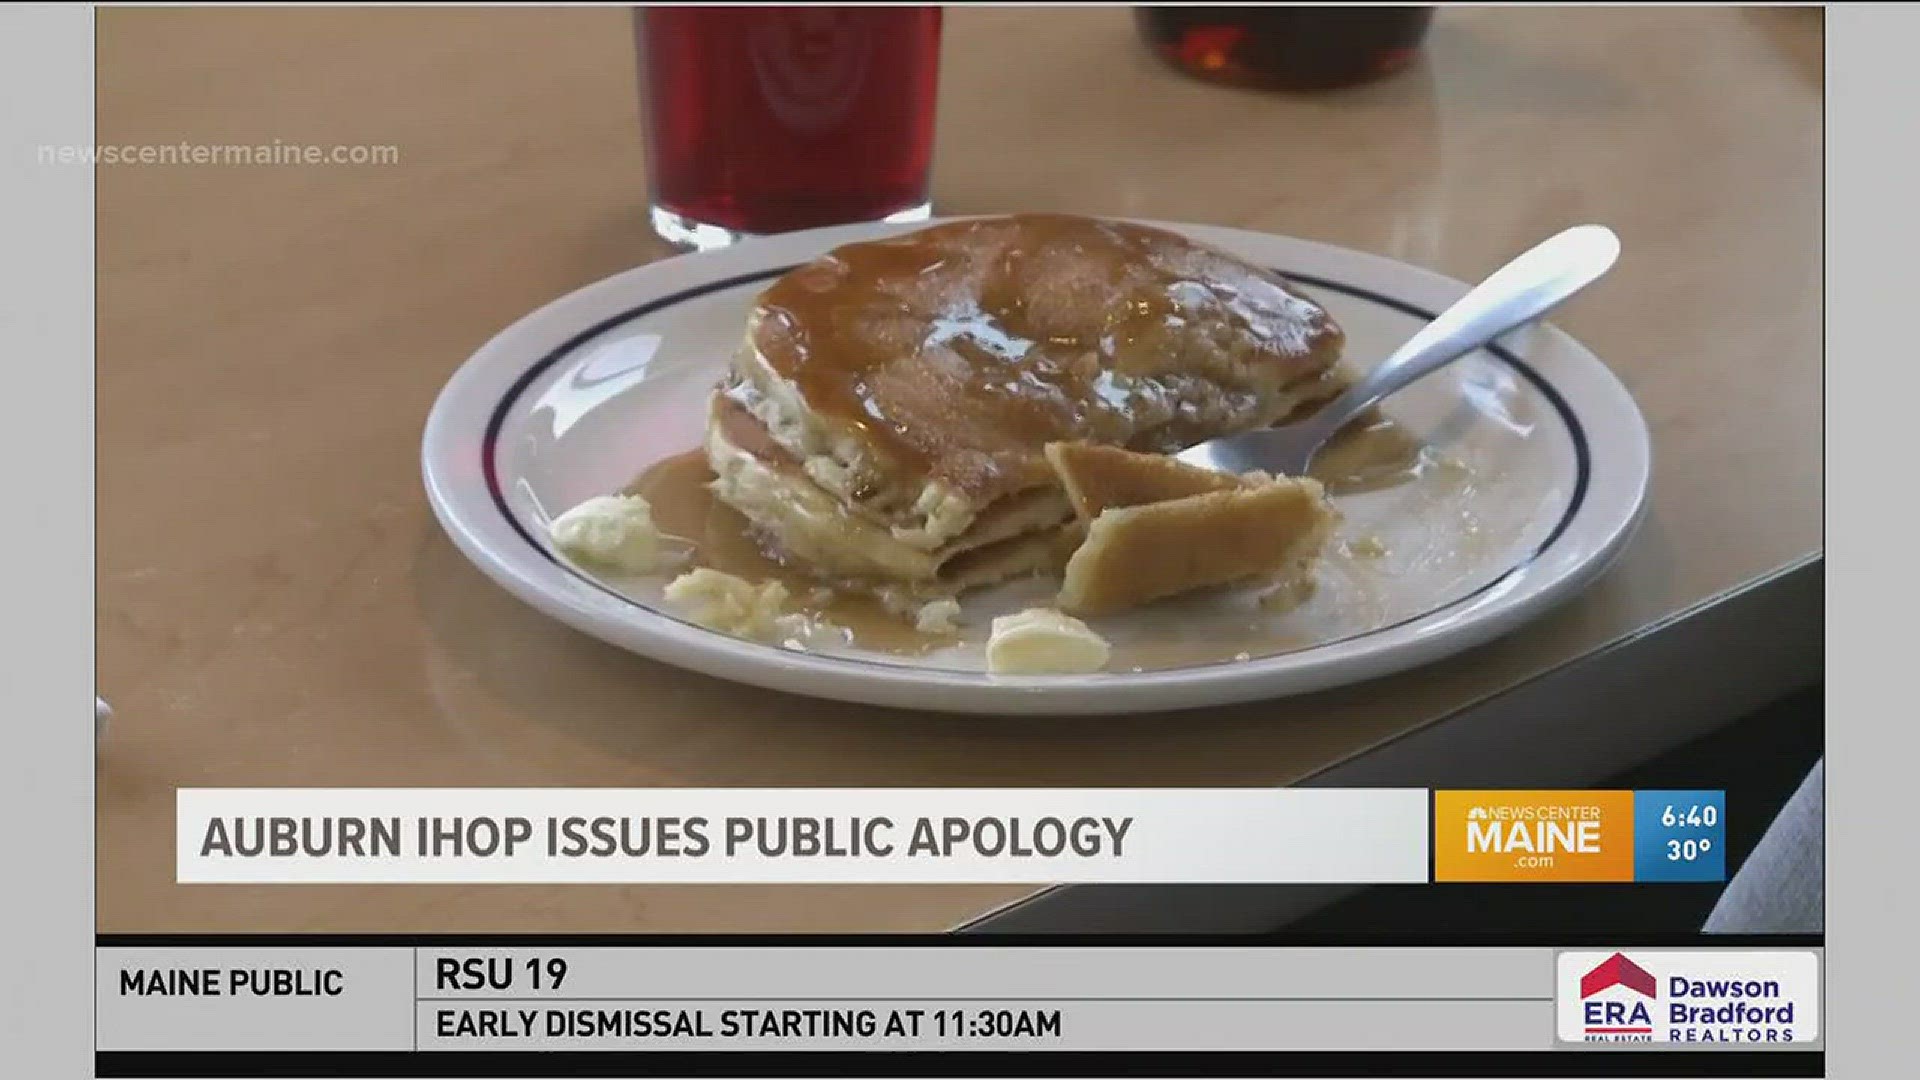 Auburn Ihop apologizes publicly